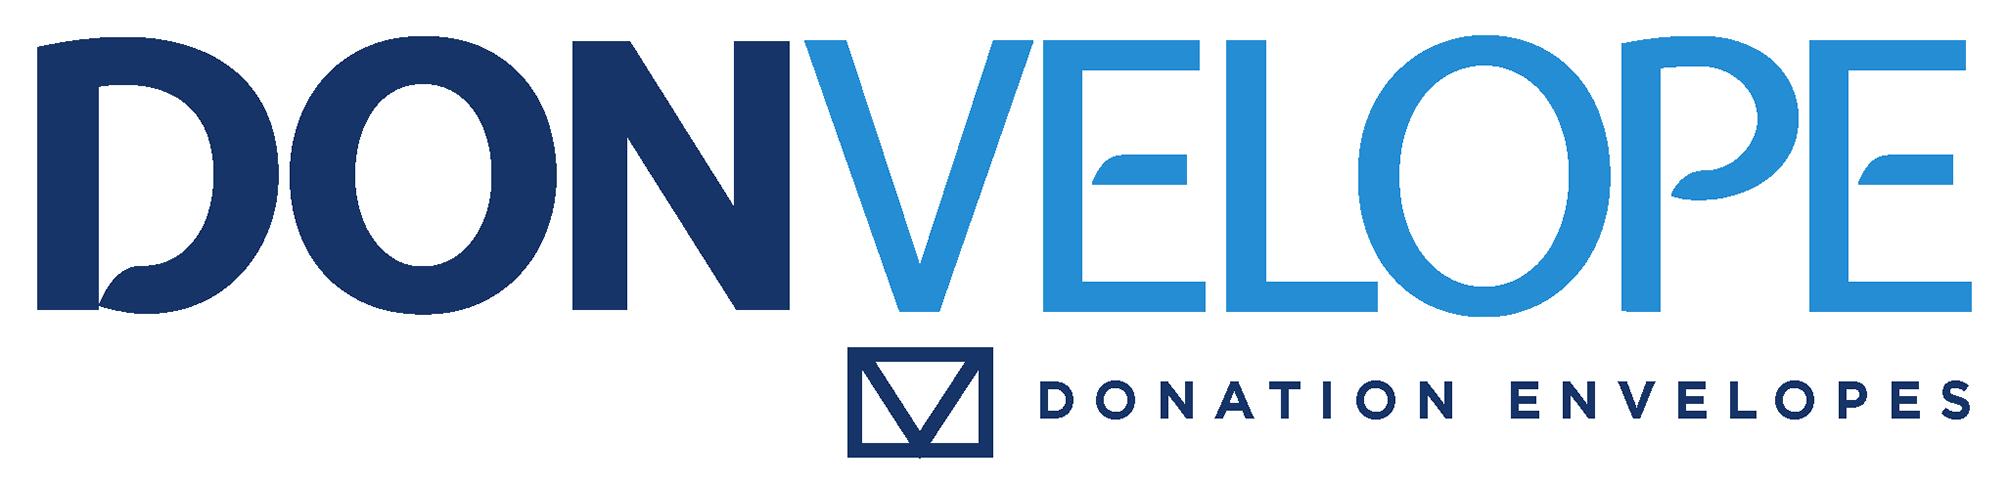 Donvelope Donation Envelope logo